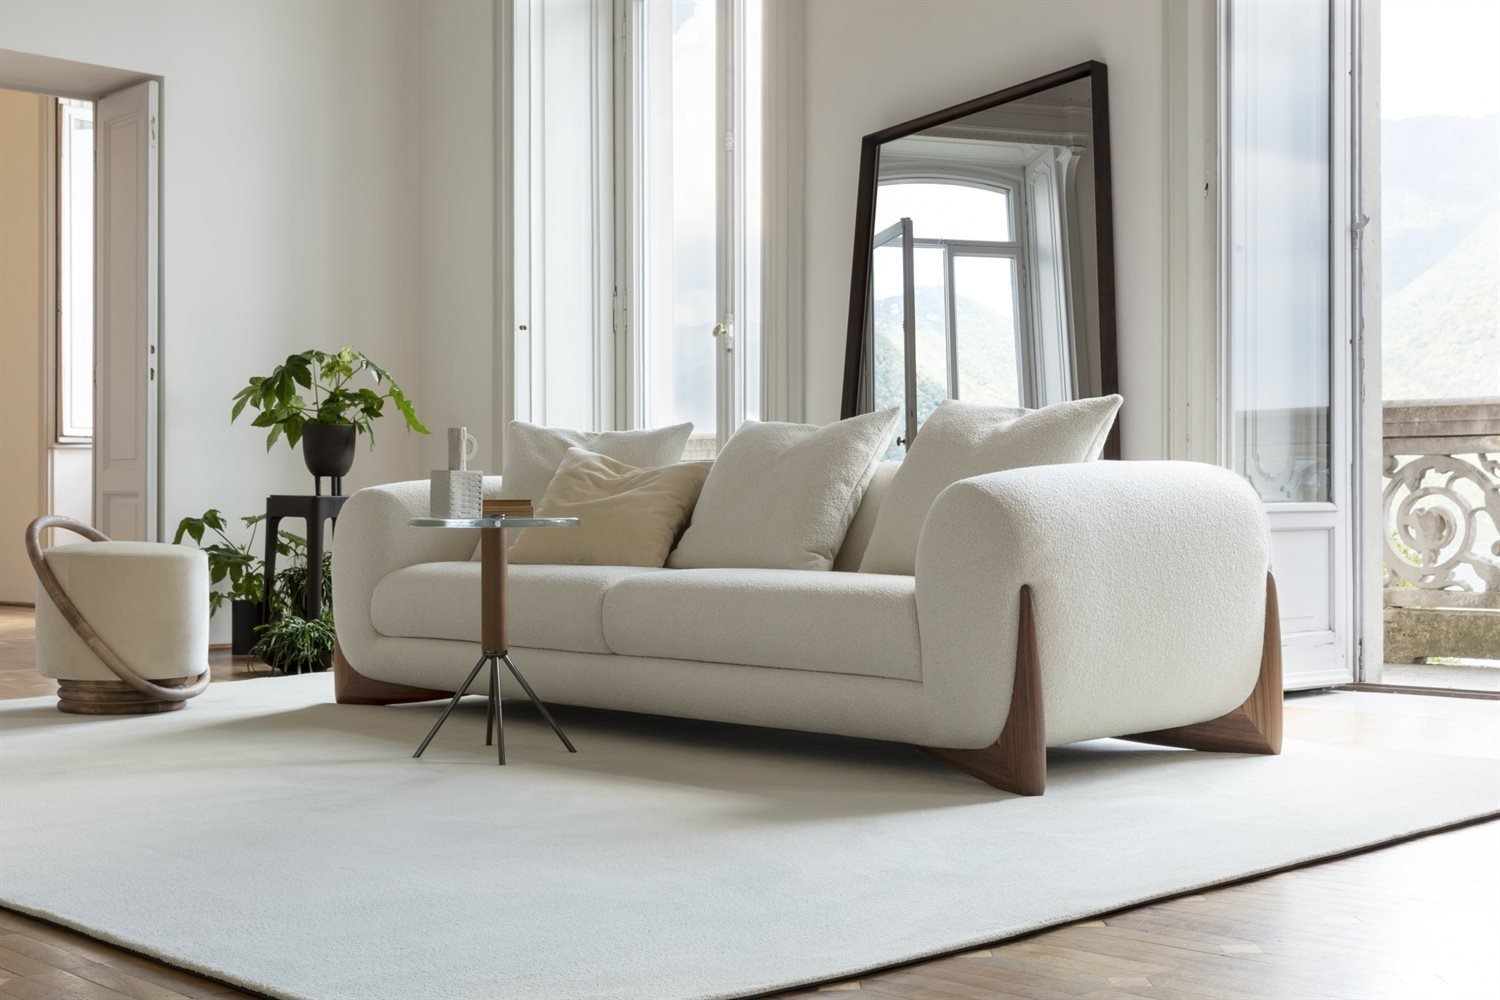 Sofa living room furniture Takis Angelides Furnihome Cyprus Porada